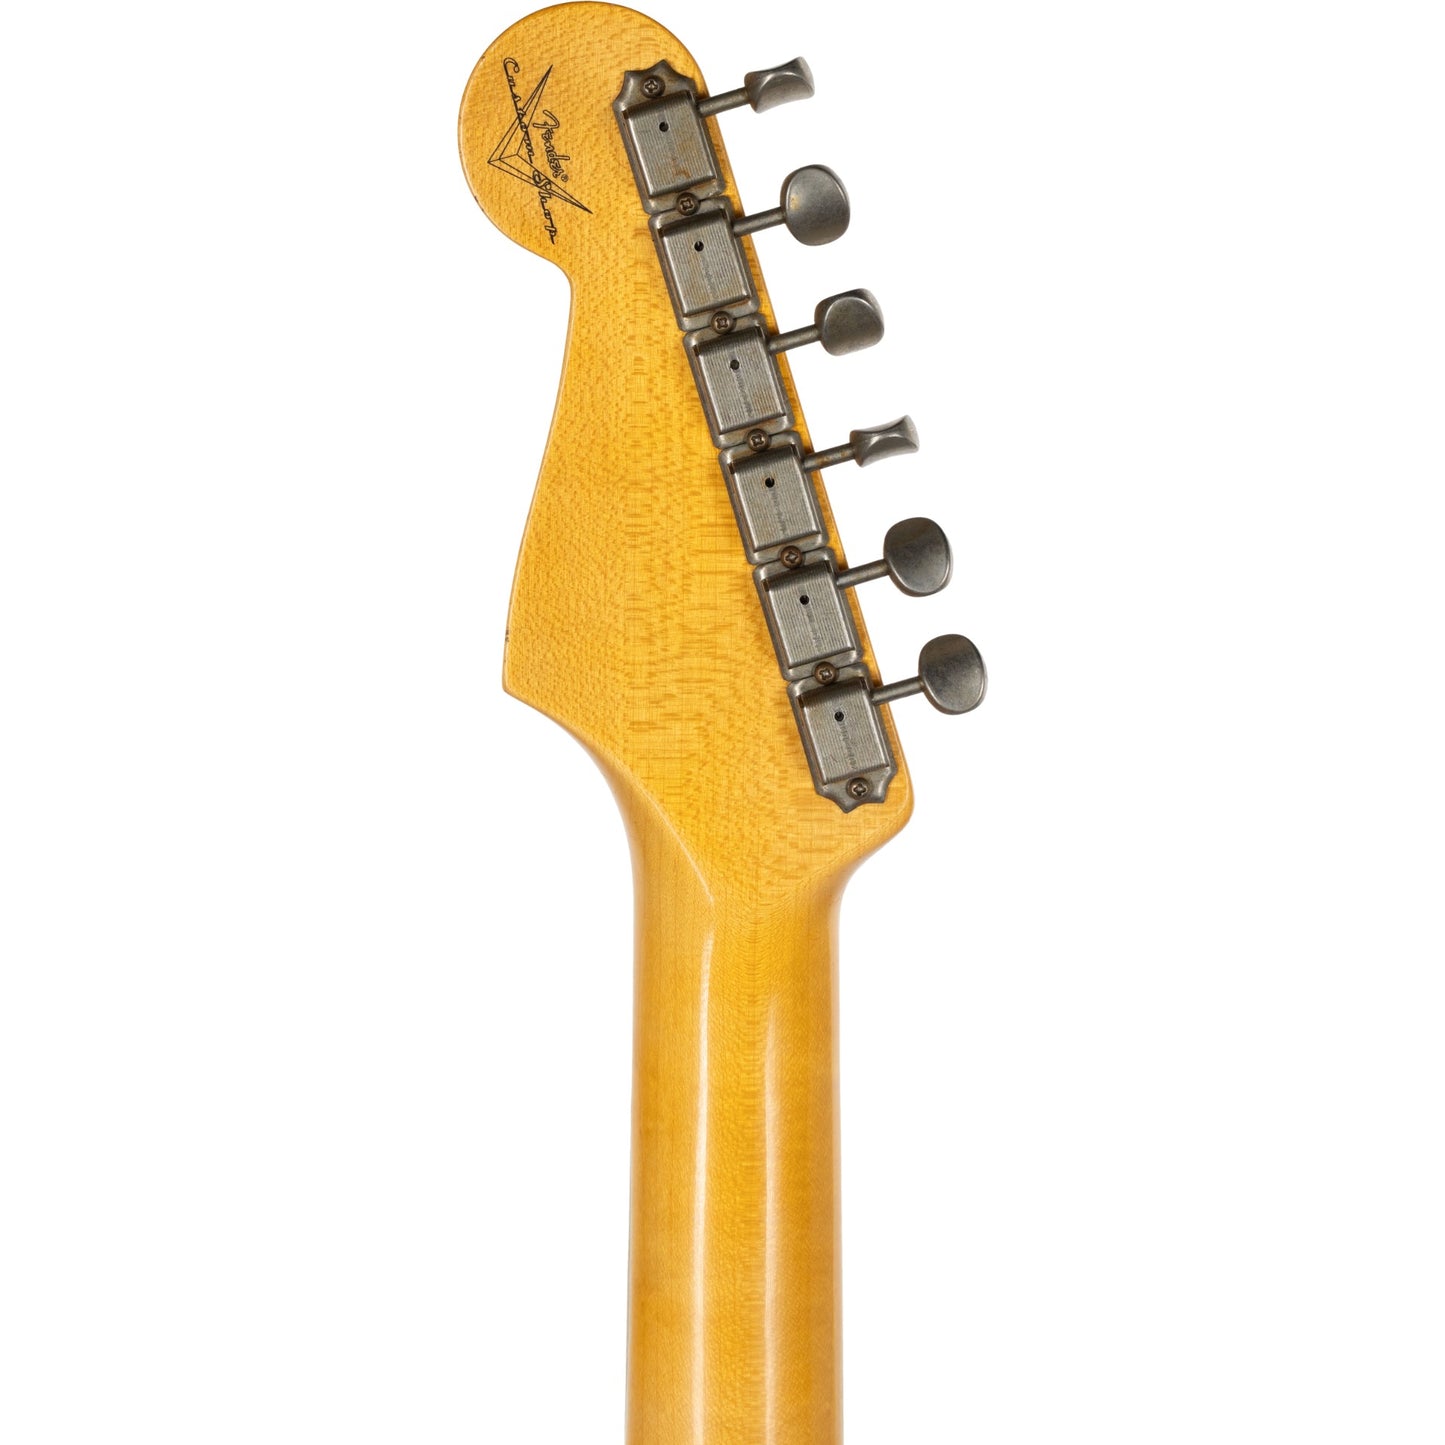 Fender Custom Shop B2 64 Stratocaster Journeyman - Faded/Aged Fiesta Red